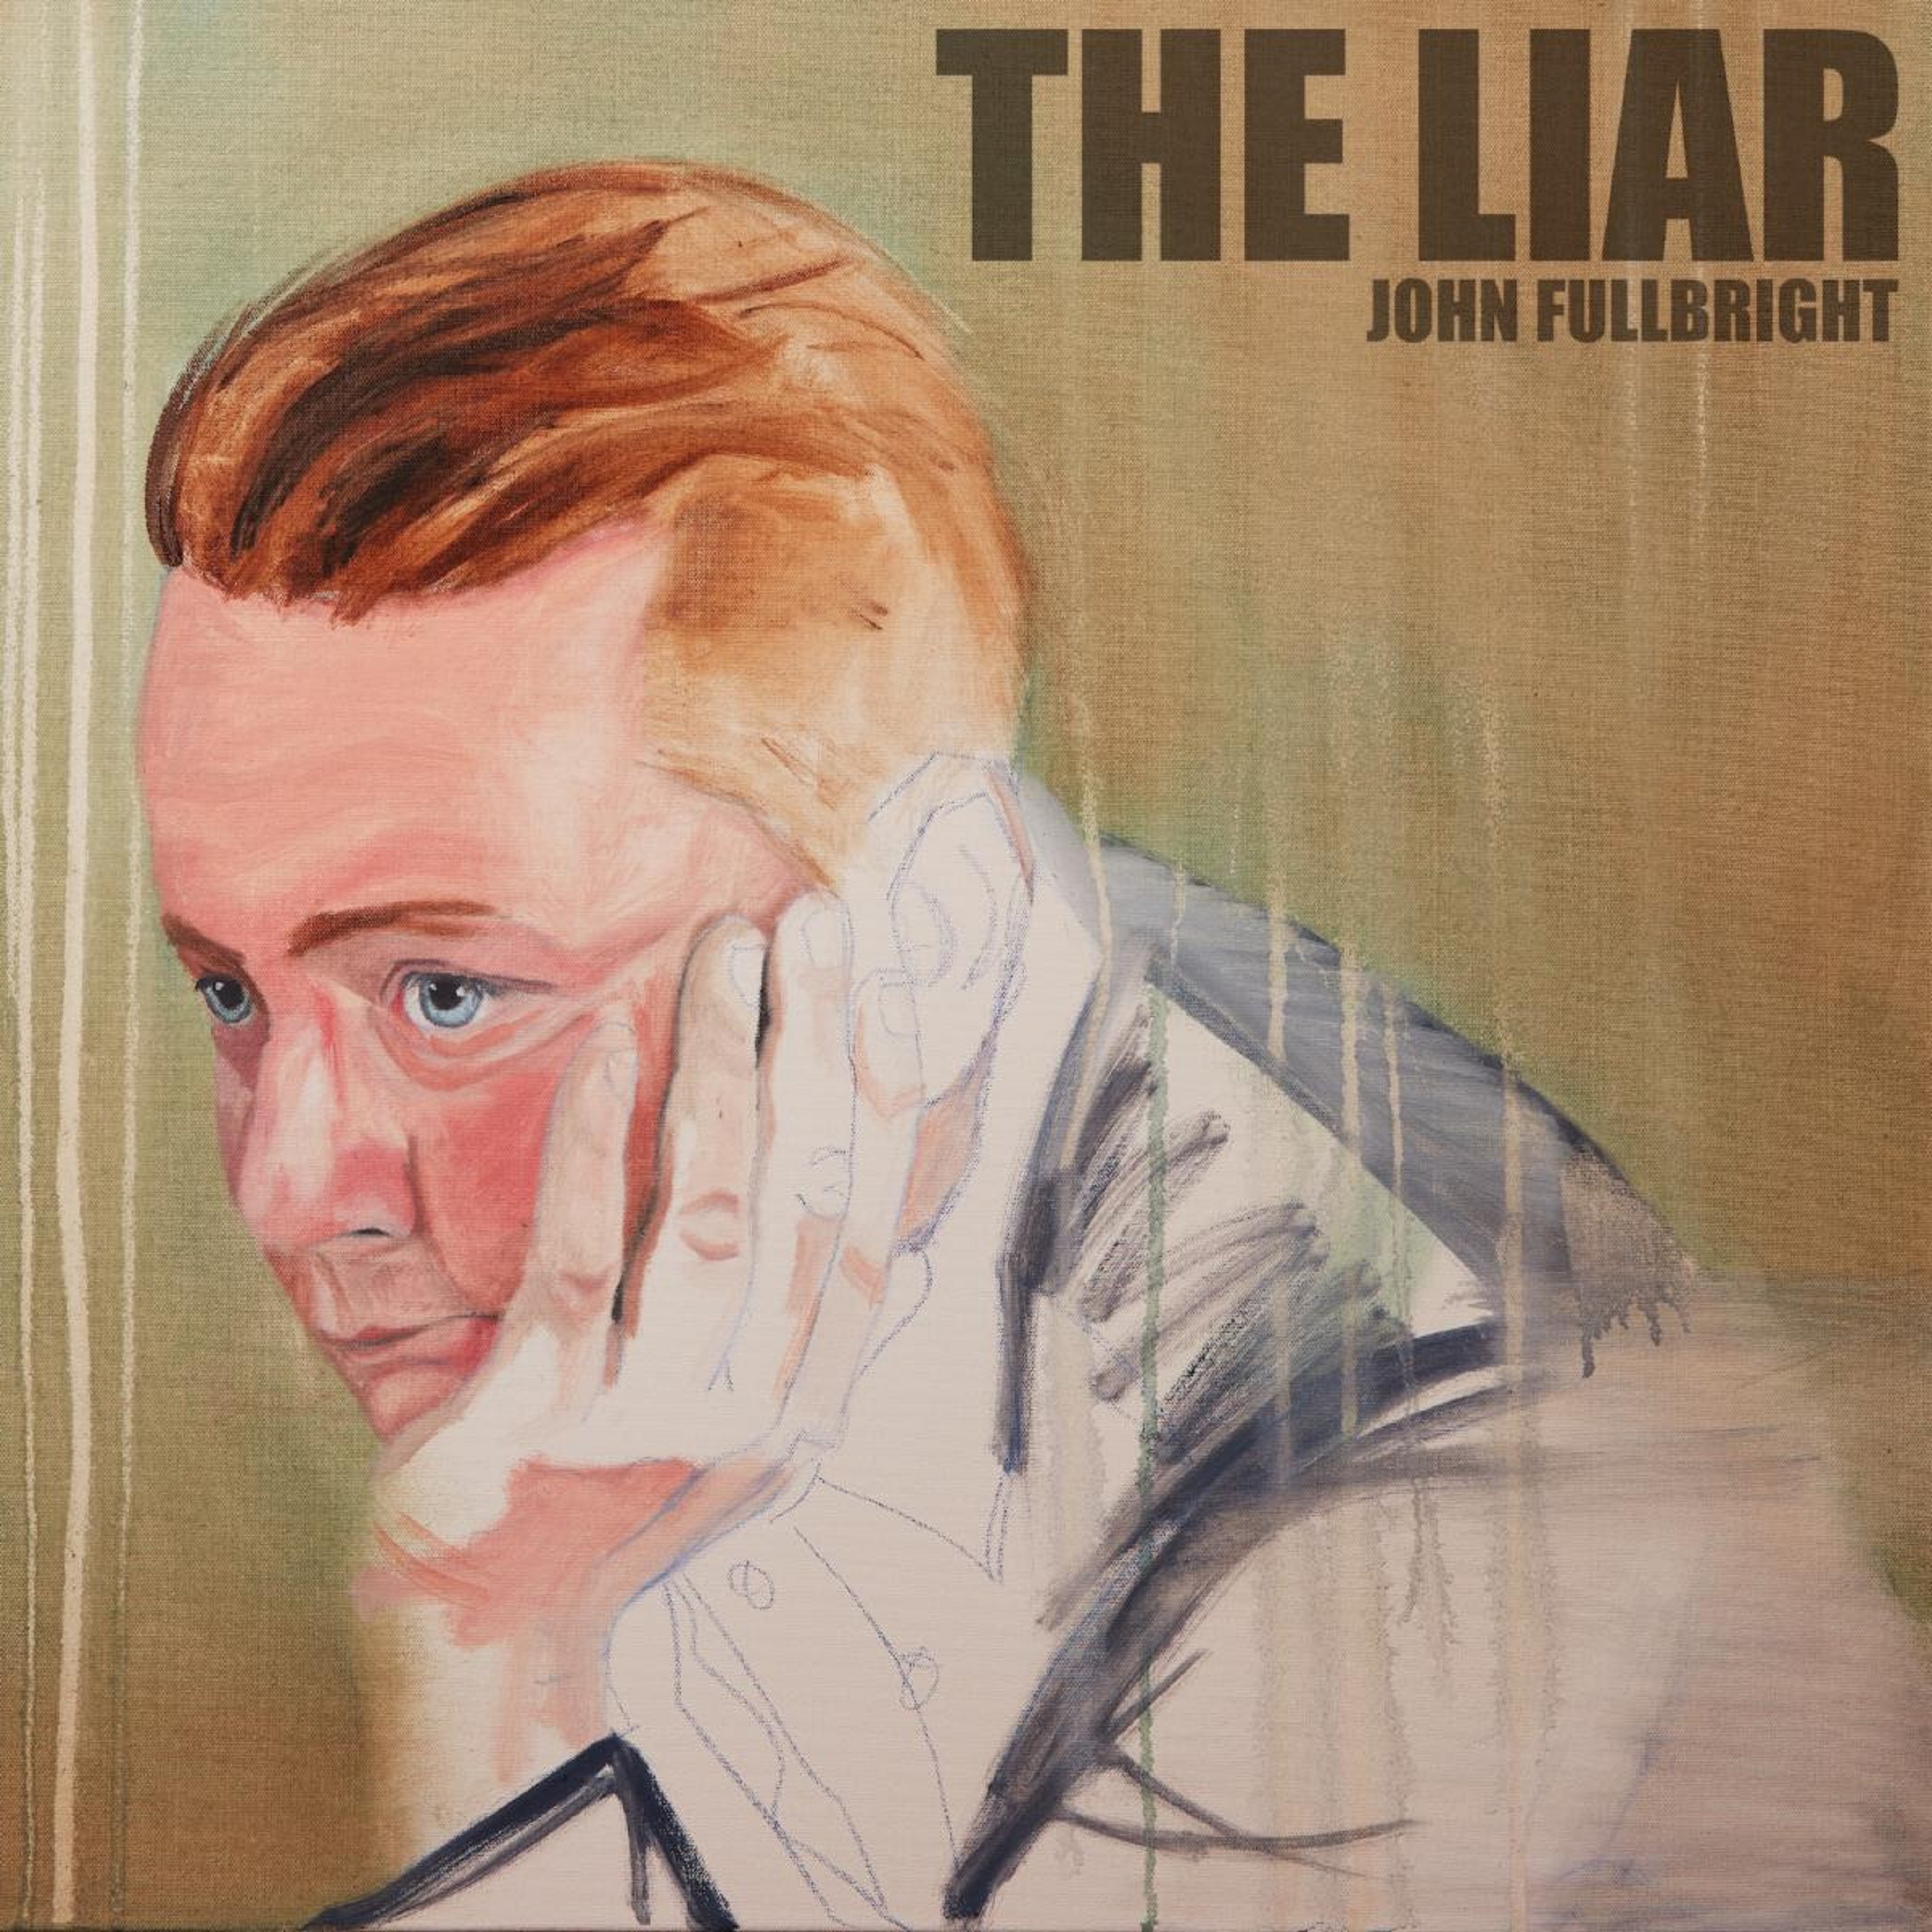 John Fullbright’s “Social Skills” Blurs Lines Between Humorous Lyrics And Serious Self-Reflection